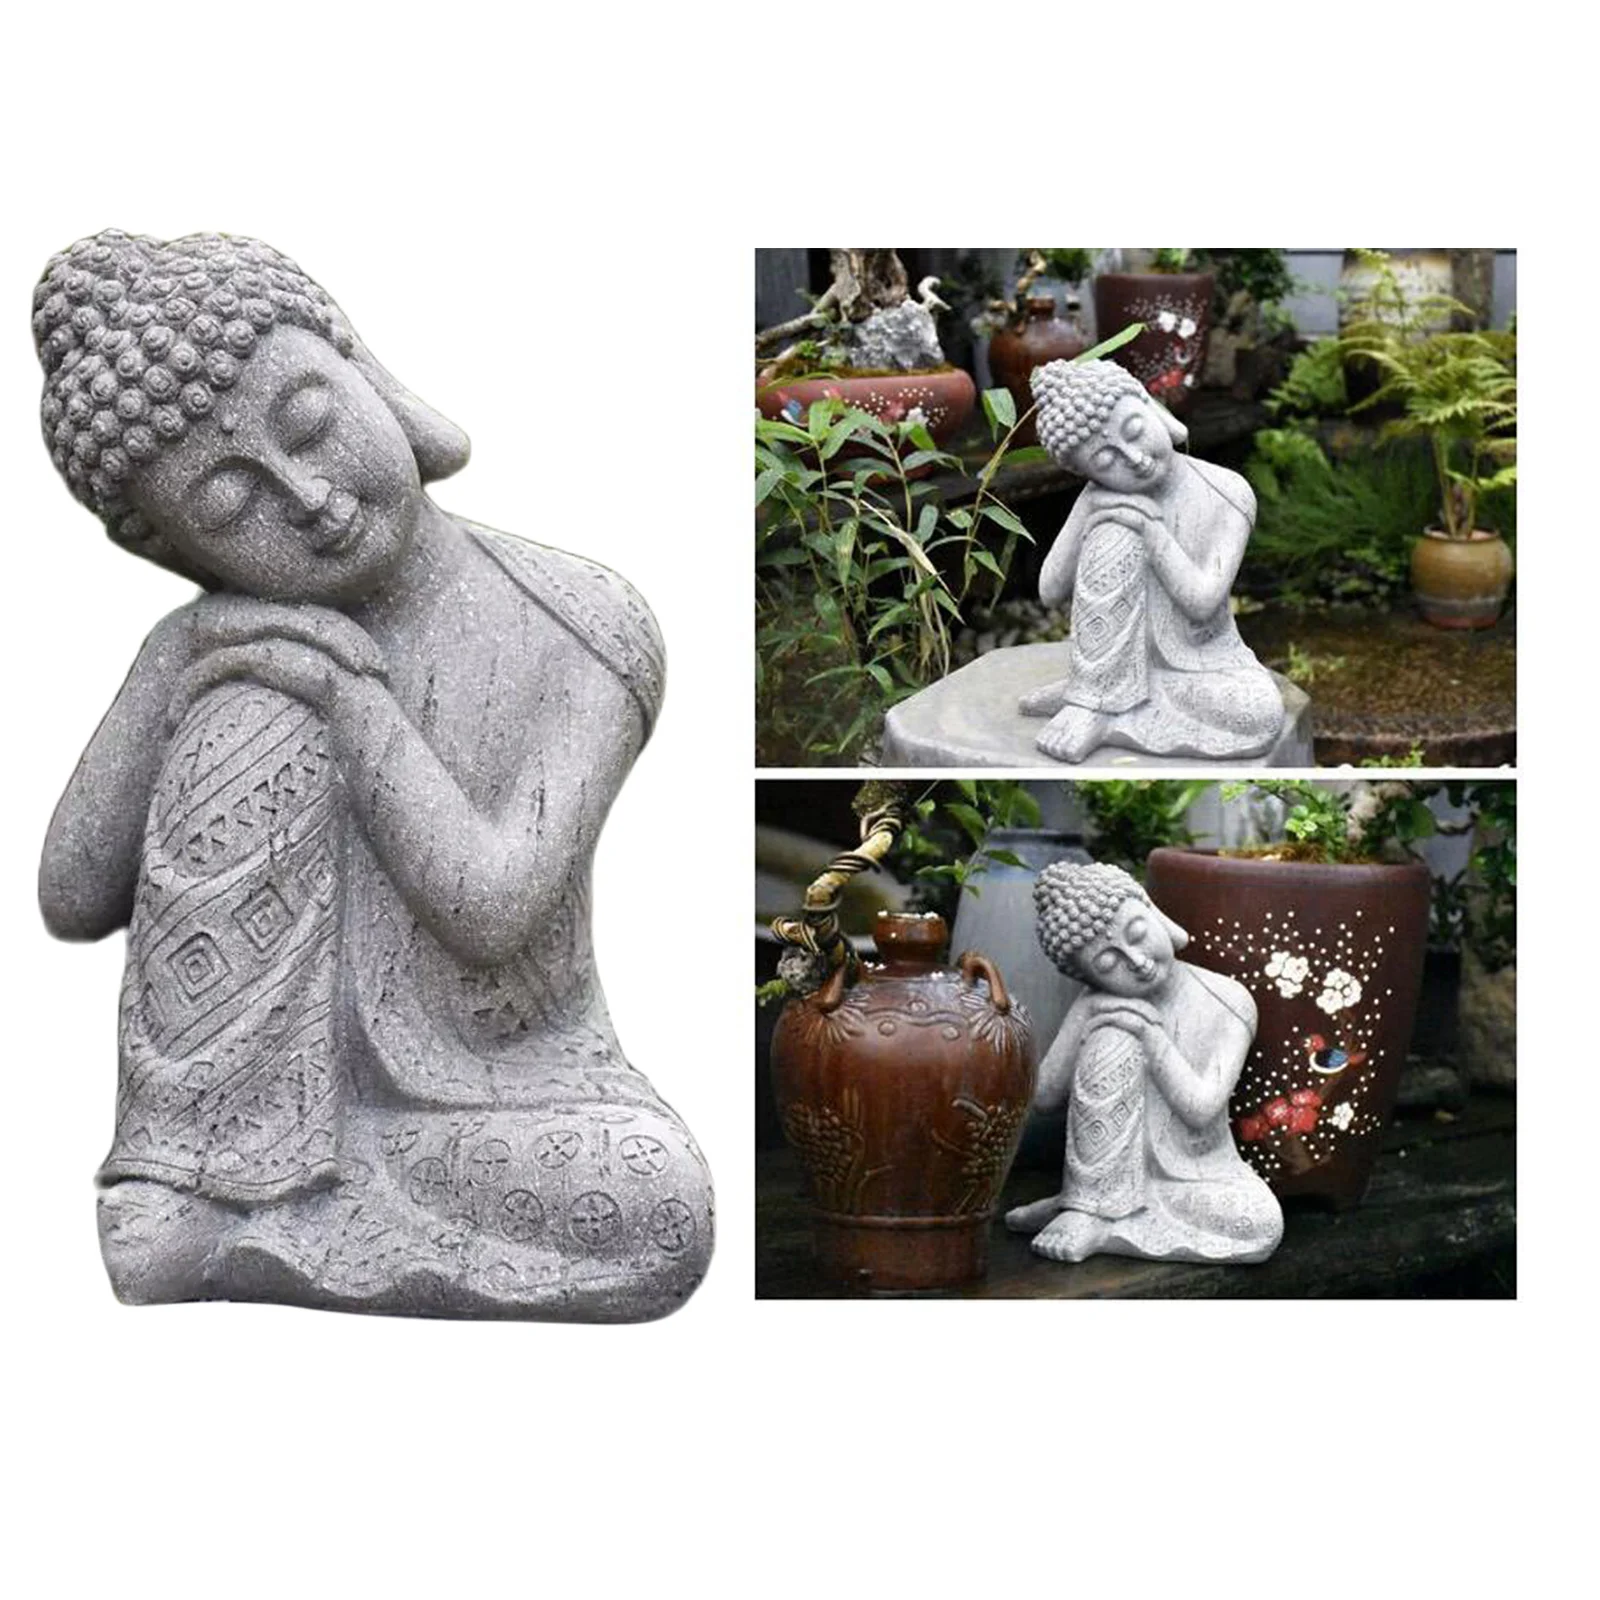 Sleeping Thai Buddha Statues Ornament Figurine, Garden Buddha Statue Sculpture Indoor/Outdoor Decor for Home,Patio Art Decor